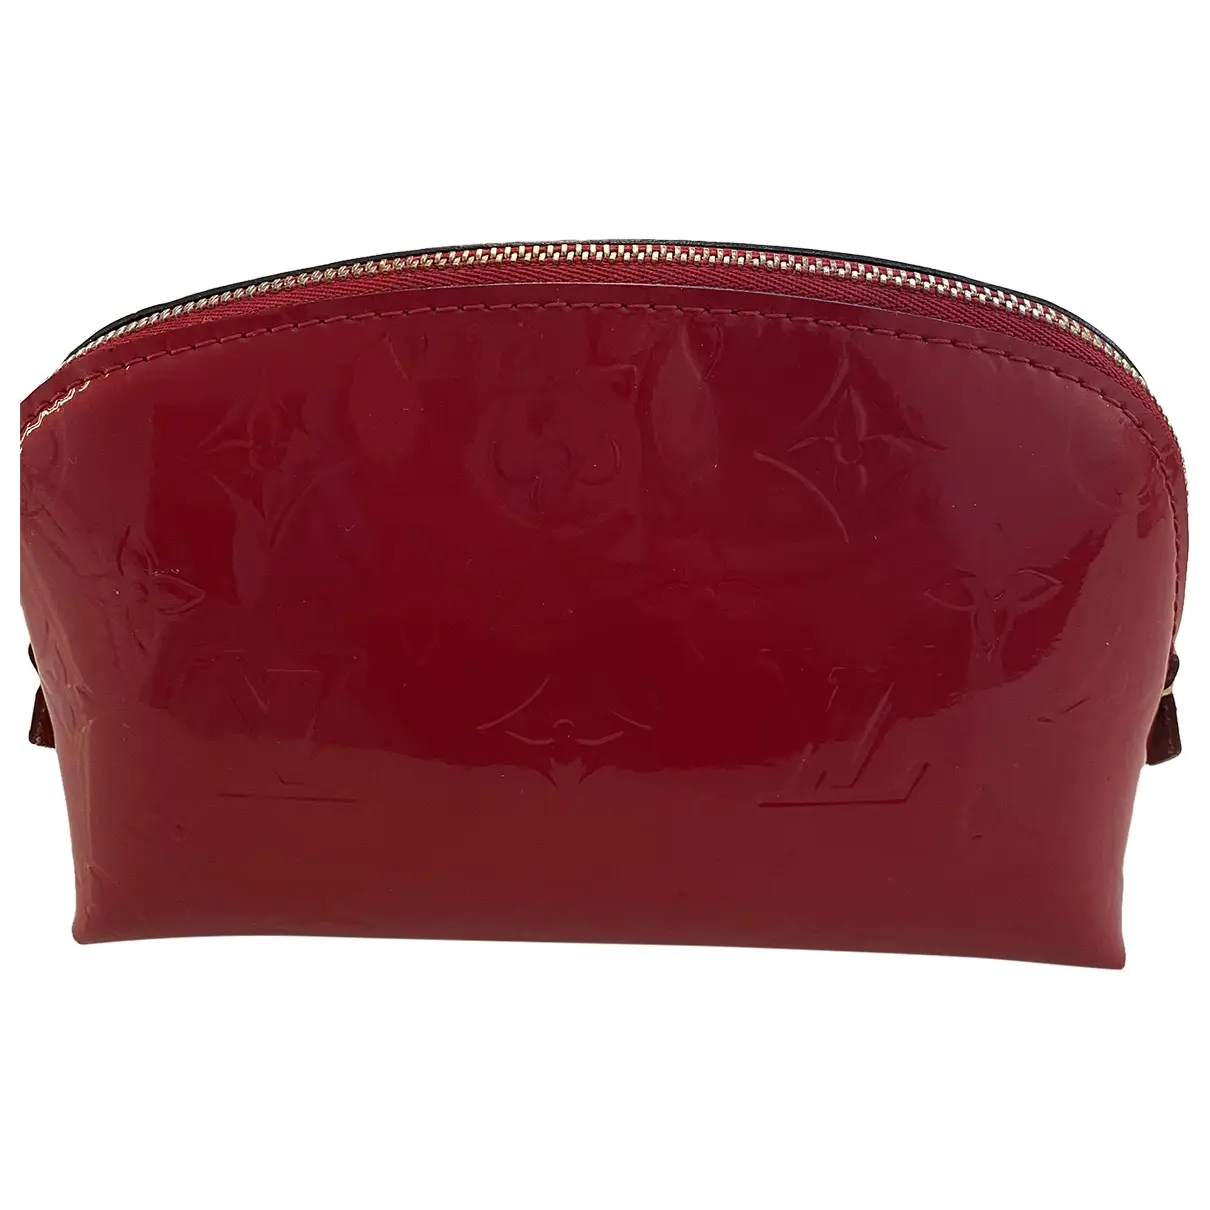 Patent leather vanity case Louis Vuitton